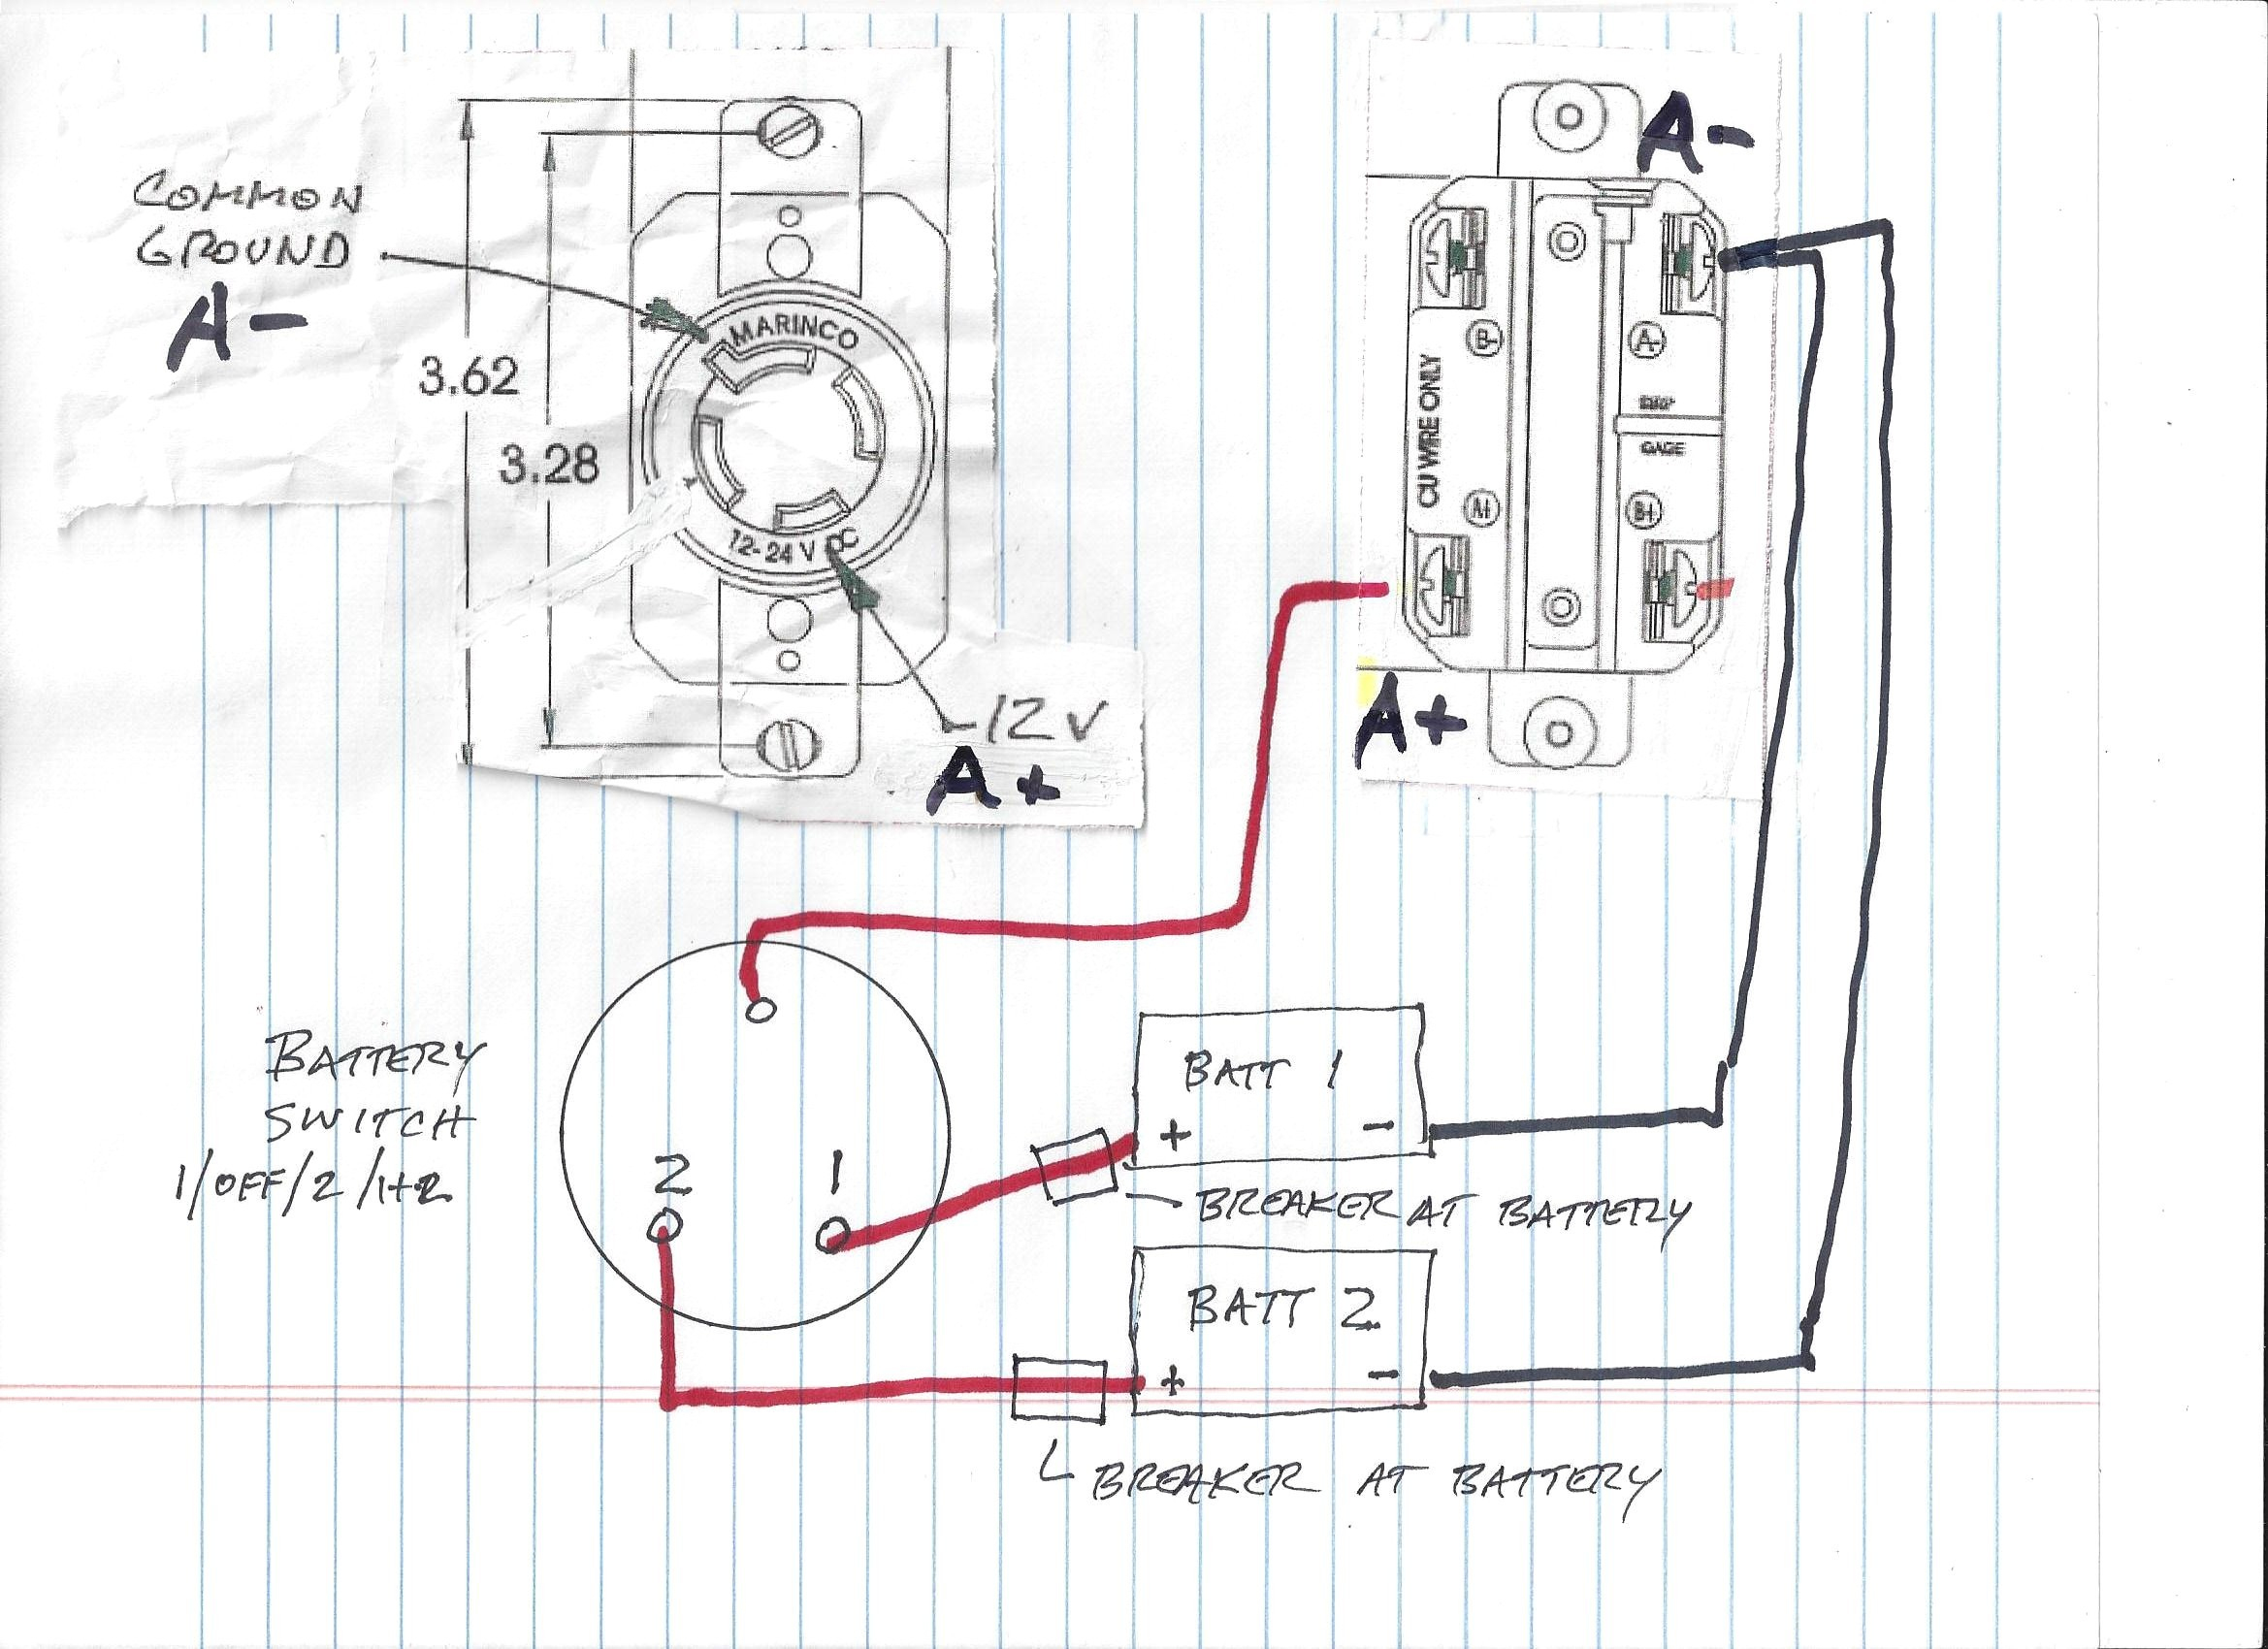 4 Wire Minn Kota Wiring Diagram | Wiring Diagram - Minn Kota Trolling Motor Plug And Receptacle Wiring Diagram